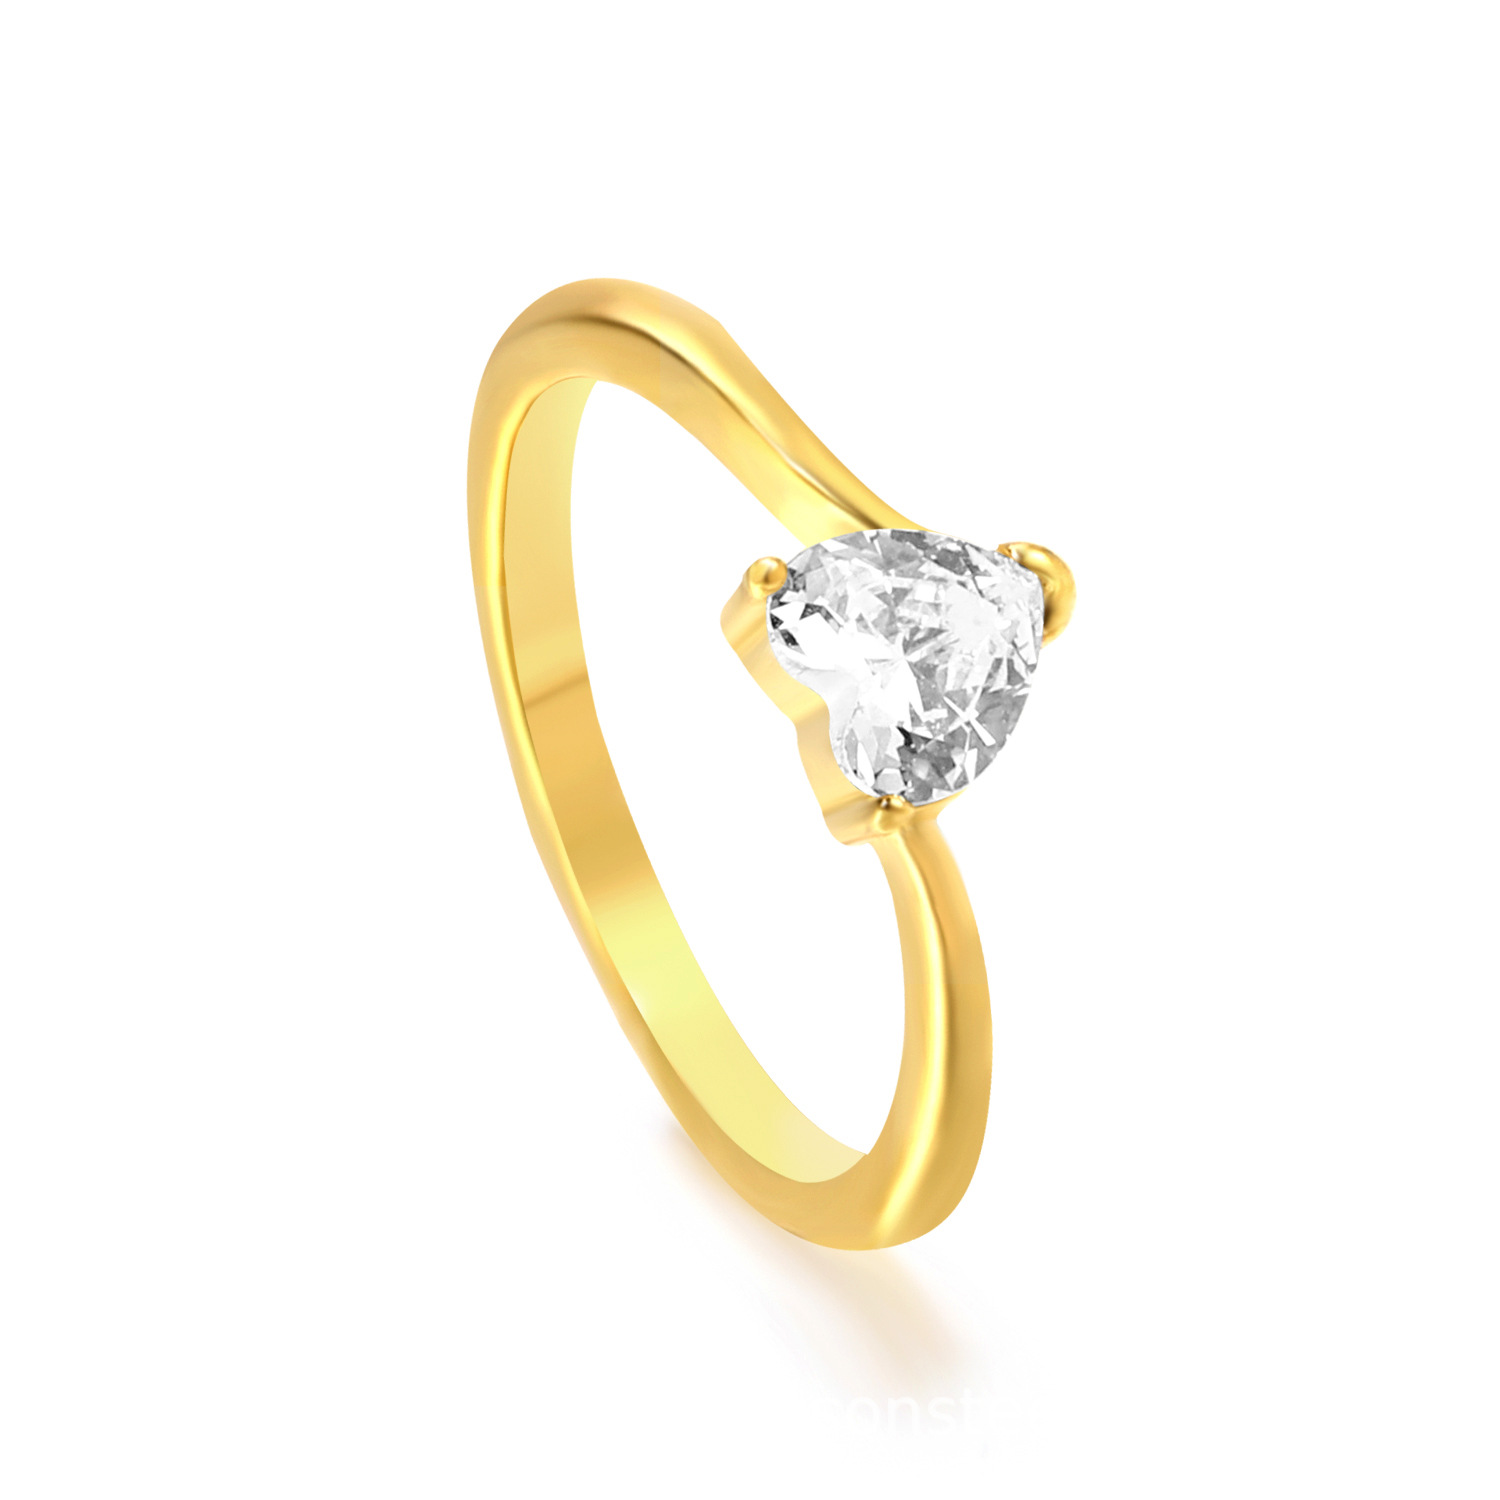 3:White Diamond Ring with Gold Heart RI144506-9G